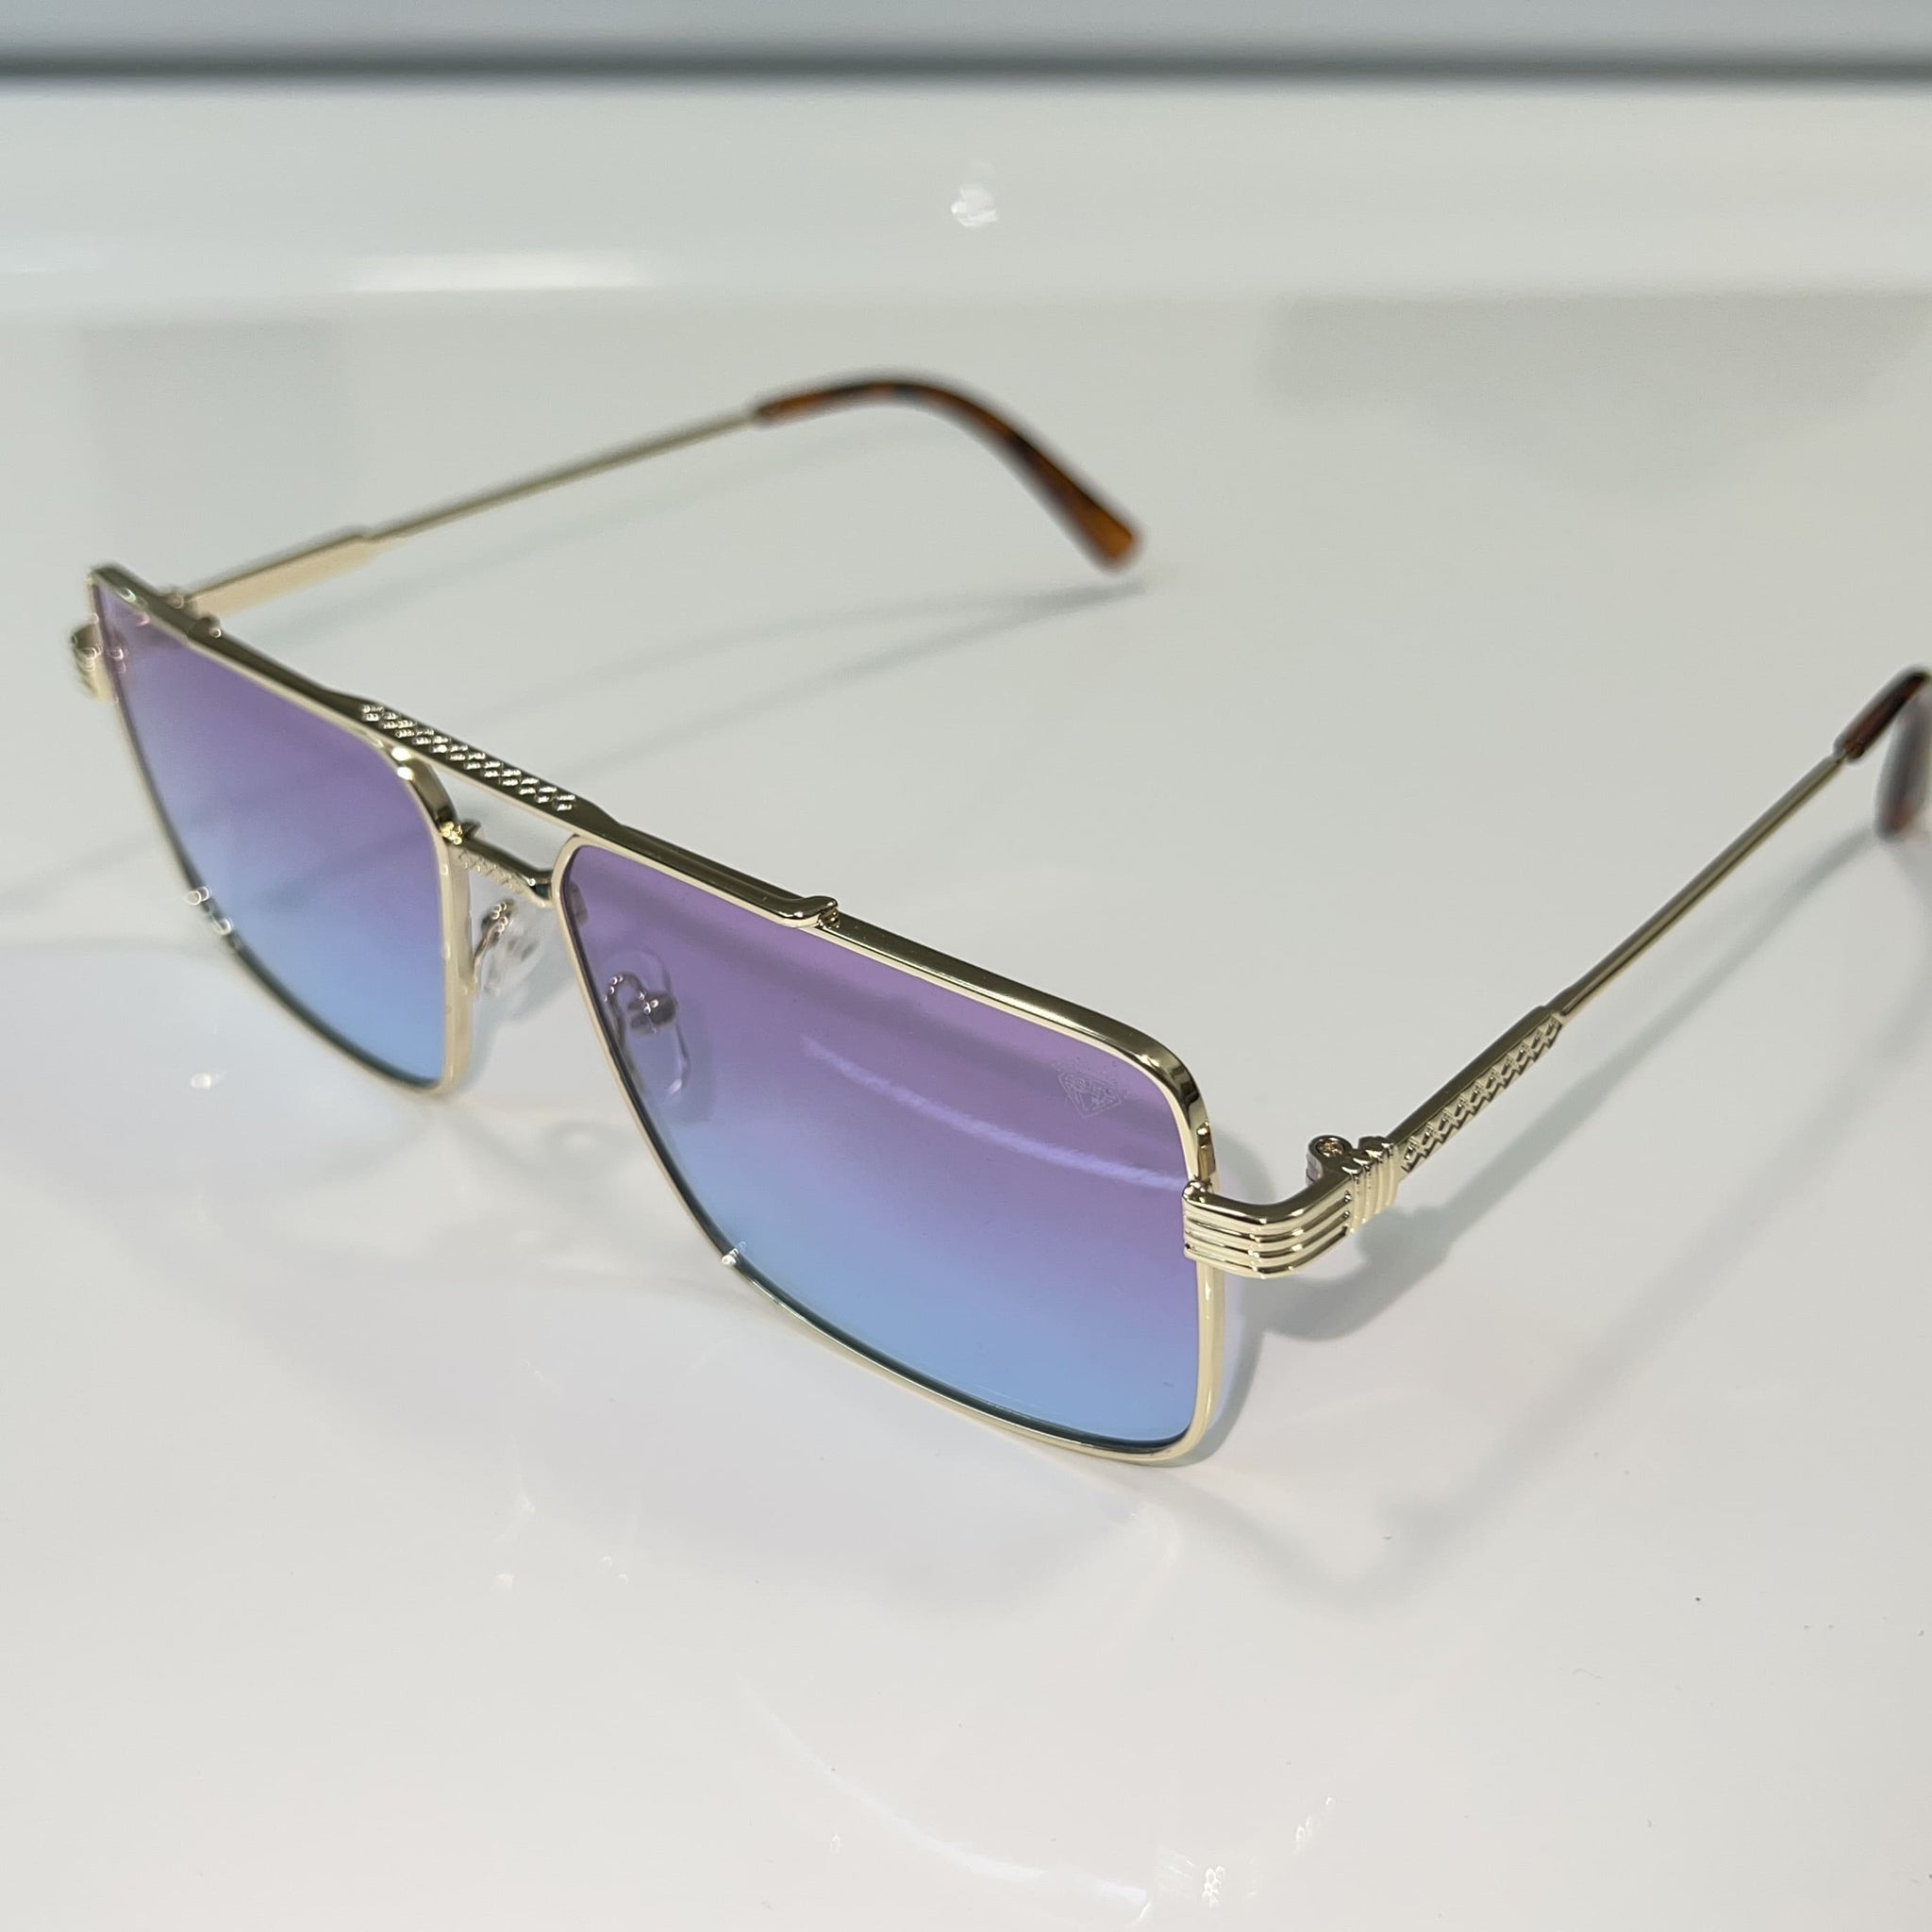 Billionaire Glasses - 14k gold plated - Purple/Blue Shade - Sehgal Glasses